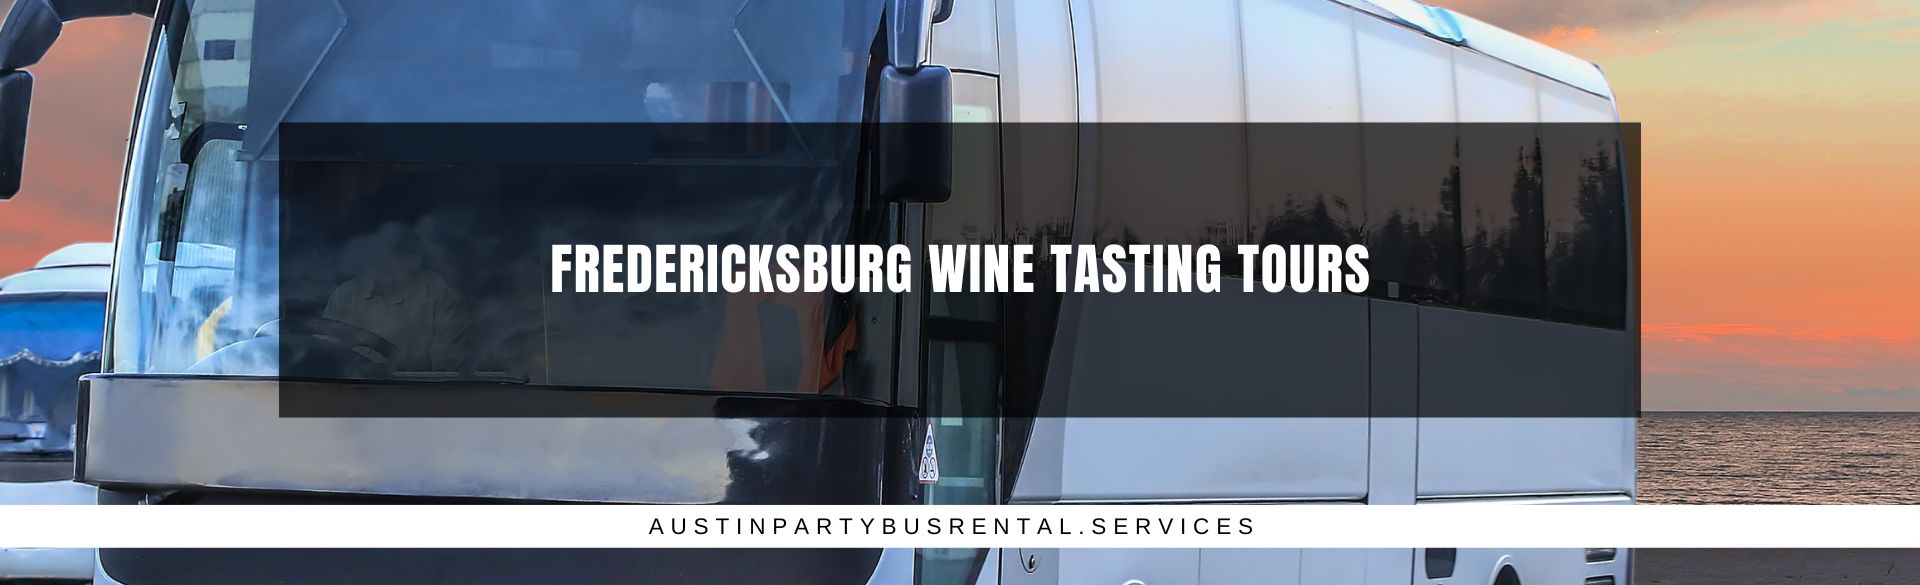 Fredericksburg Wine Tasting Tours